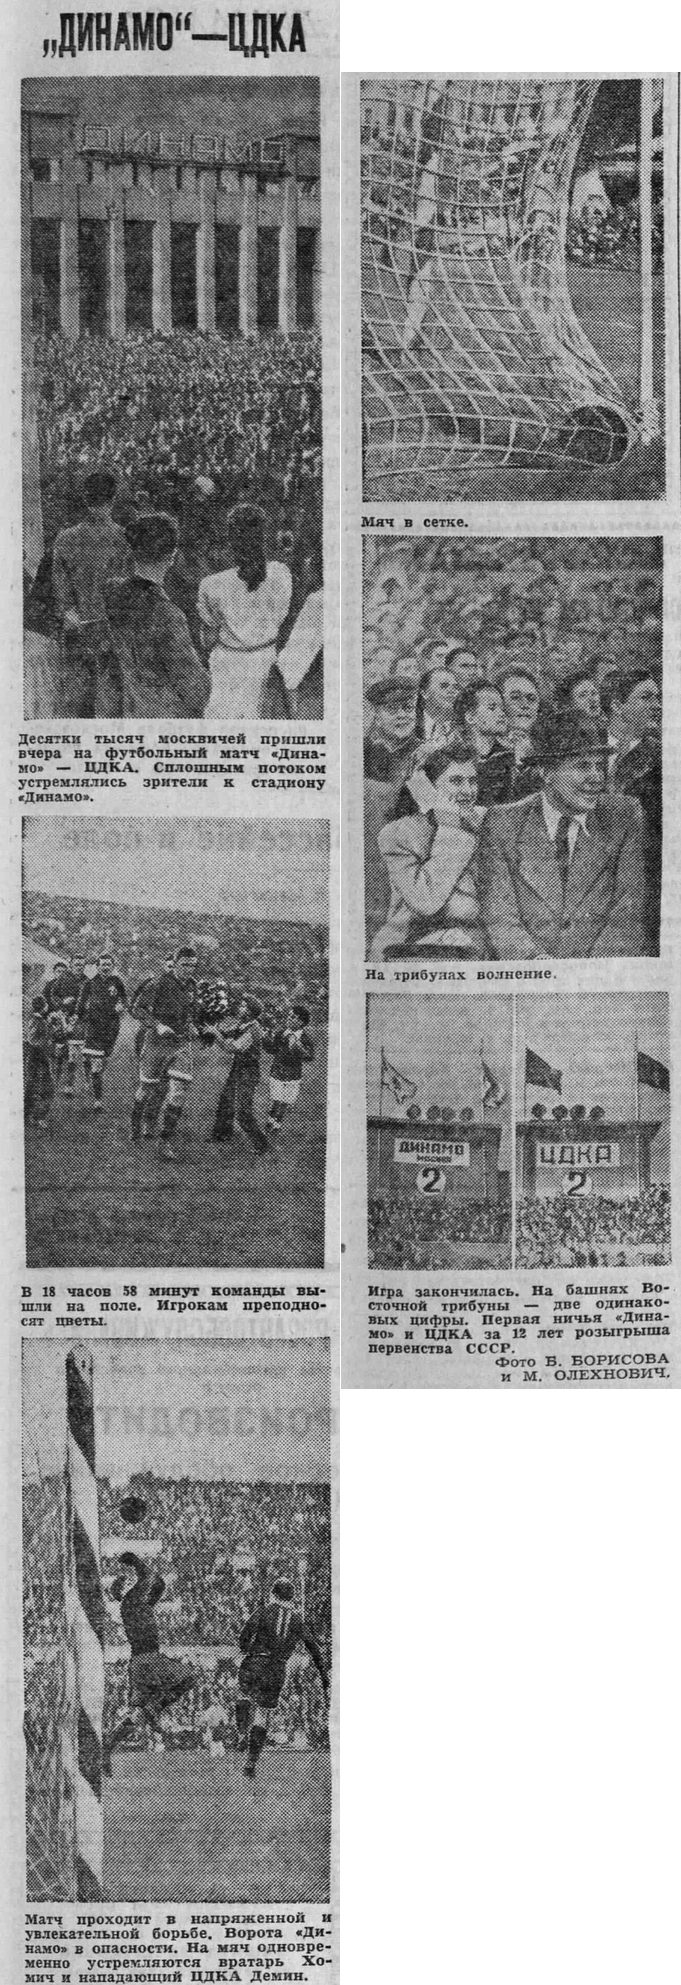 1948-07-20.DinamoM-CDKA.3